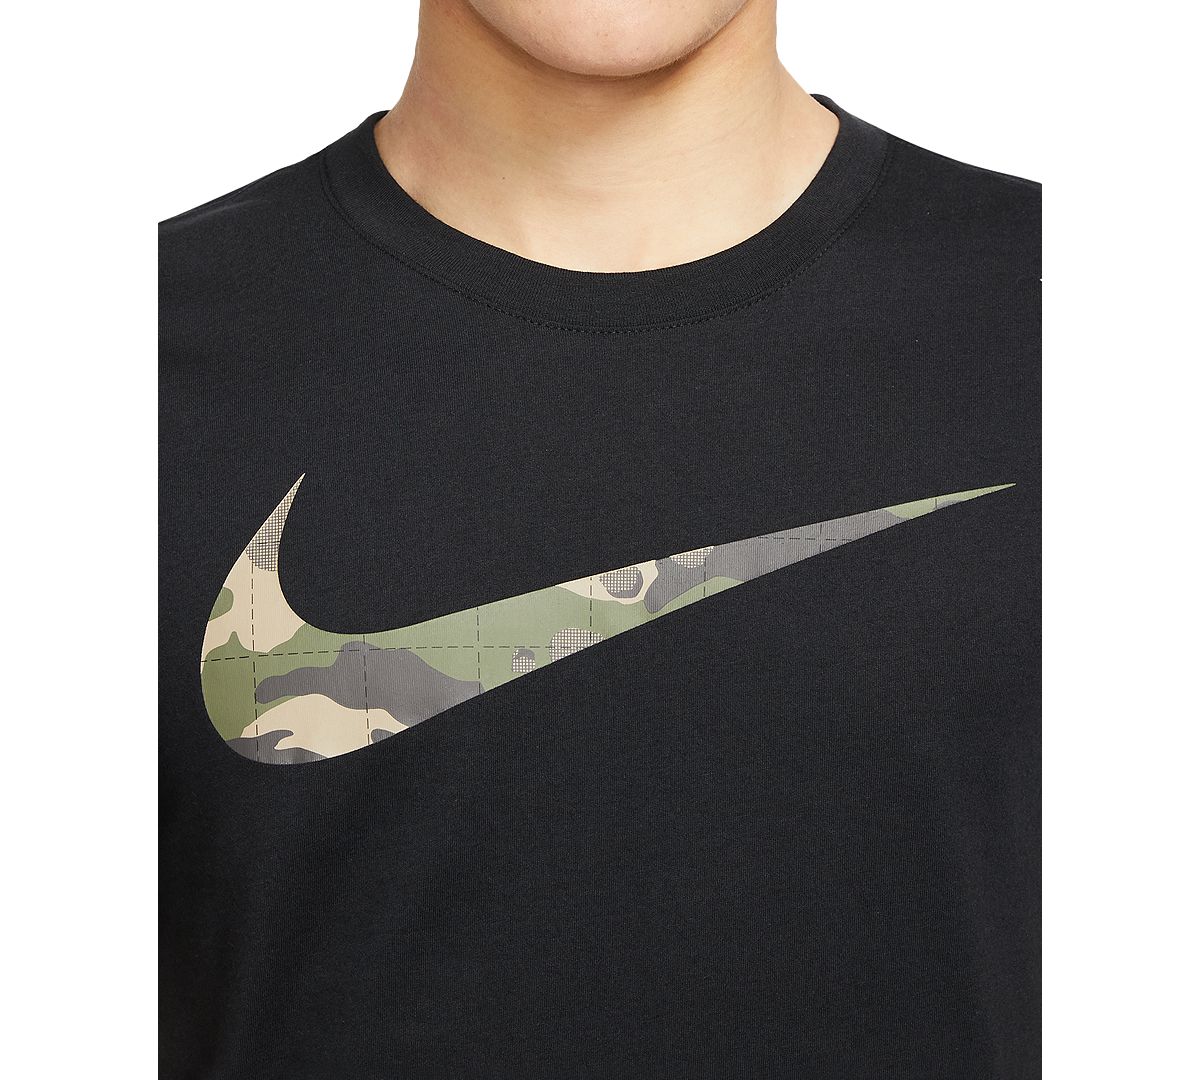 Nike Camo Swoosh T-shirt Black